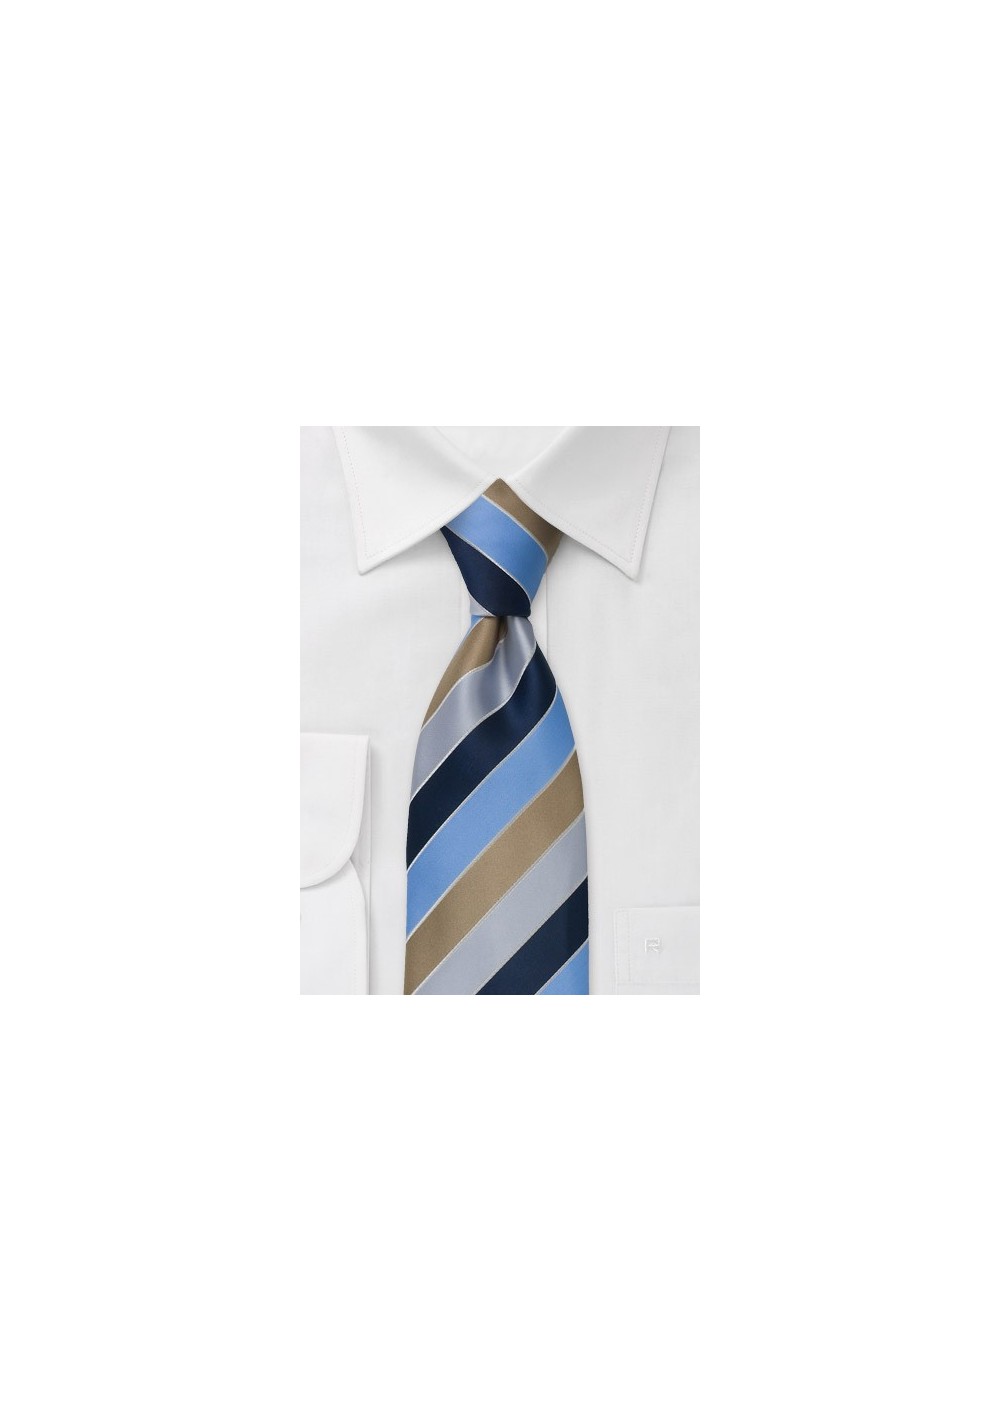 Wide striped tie - Stripes in navy blue, light blue, beige, and tan